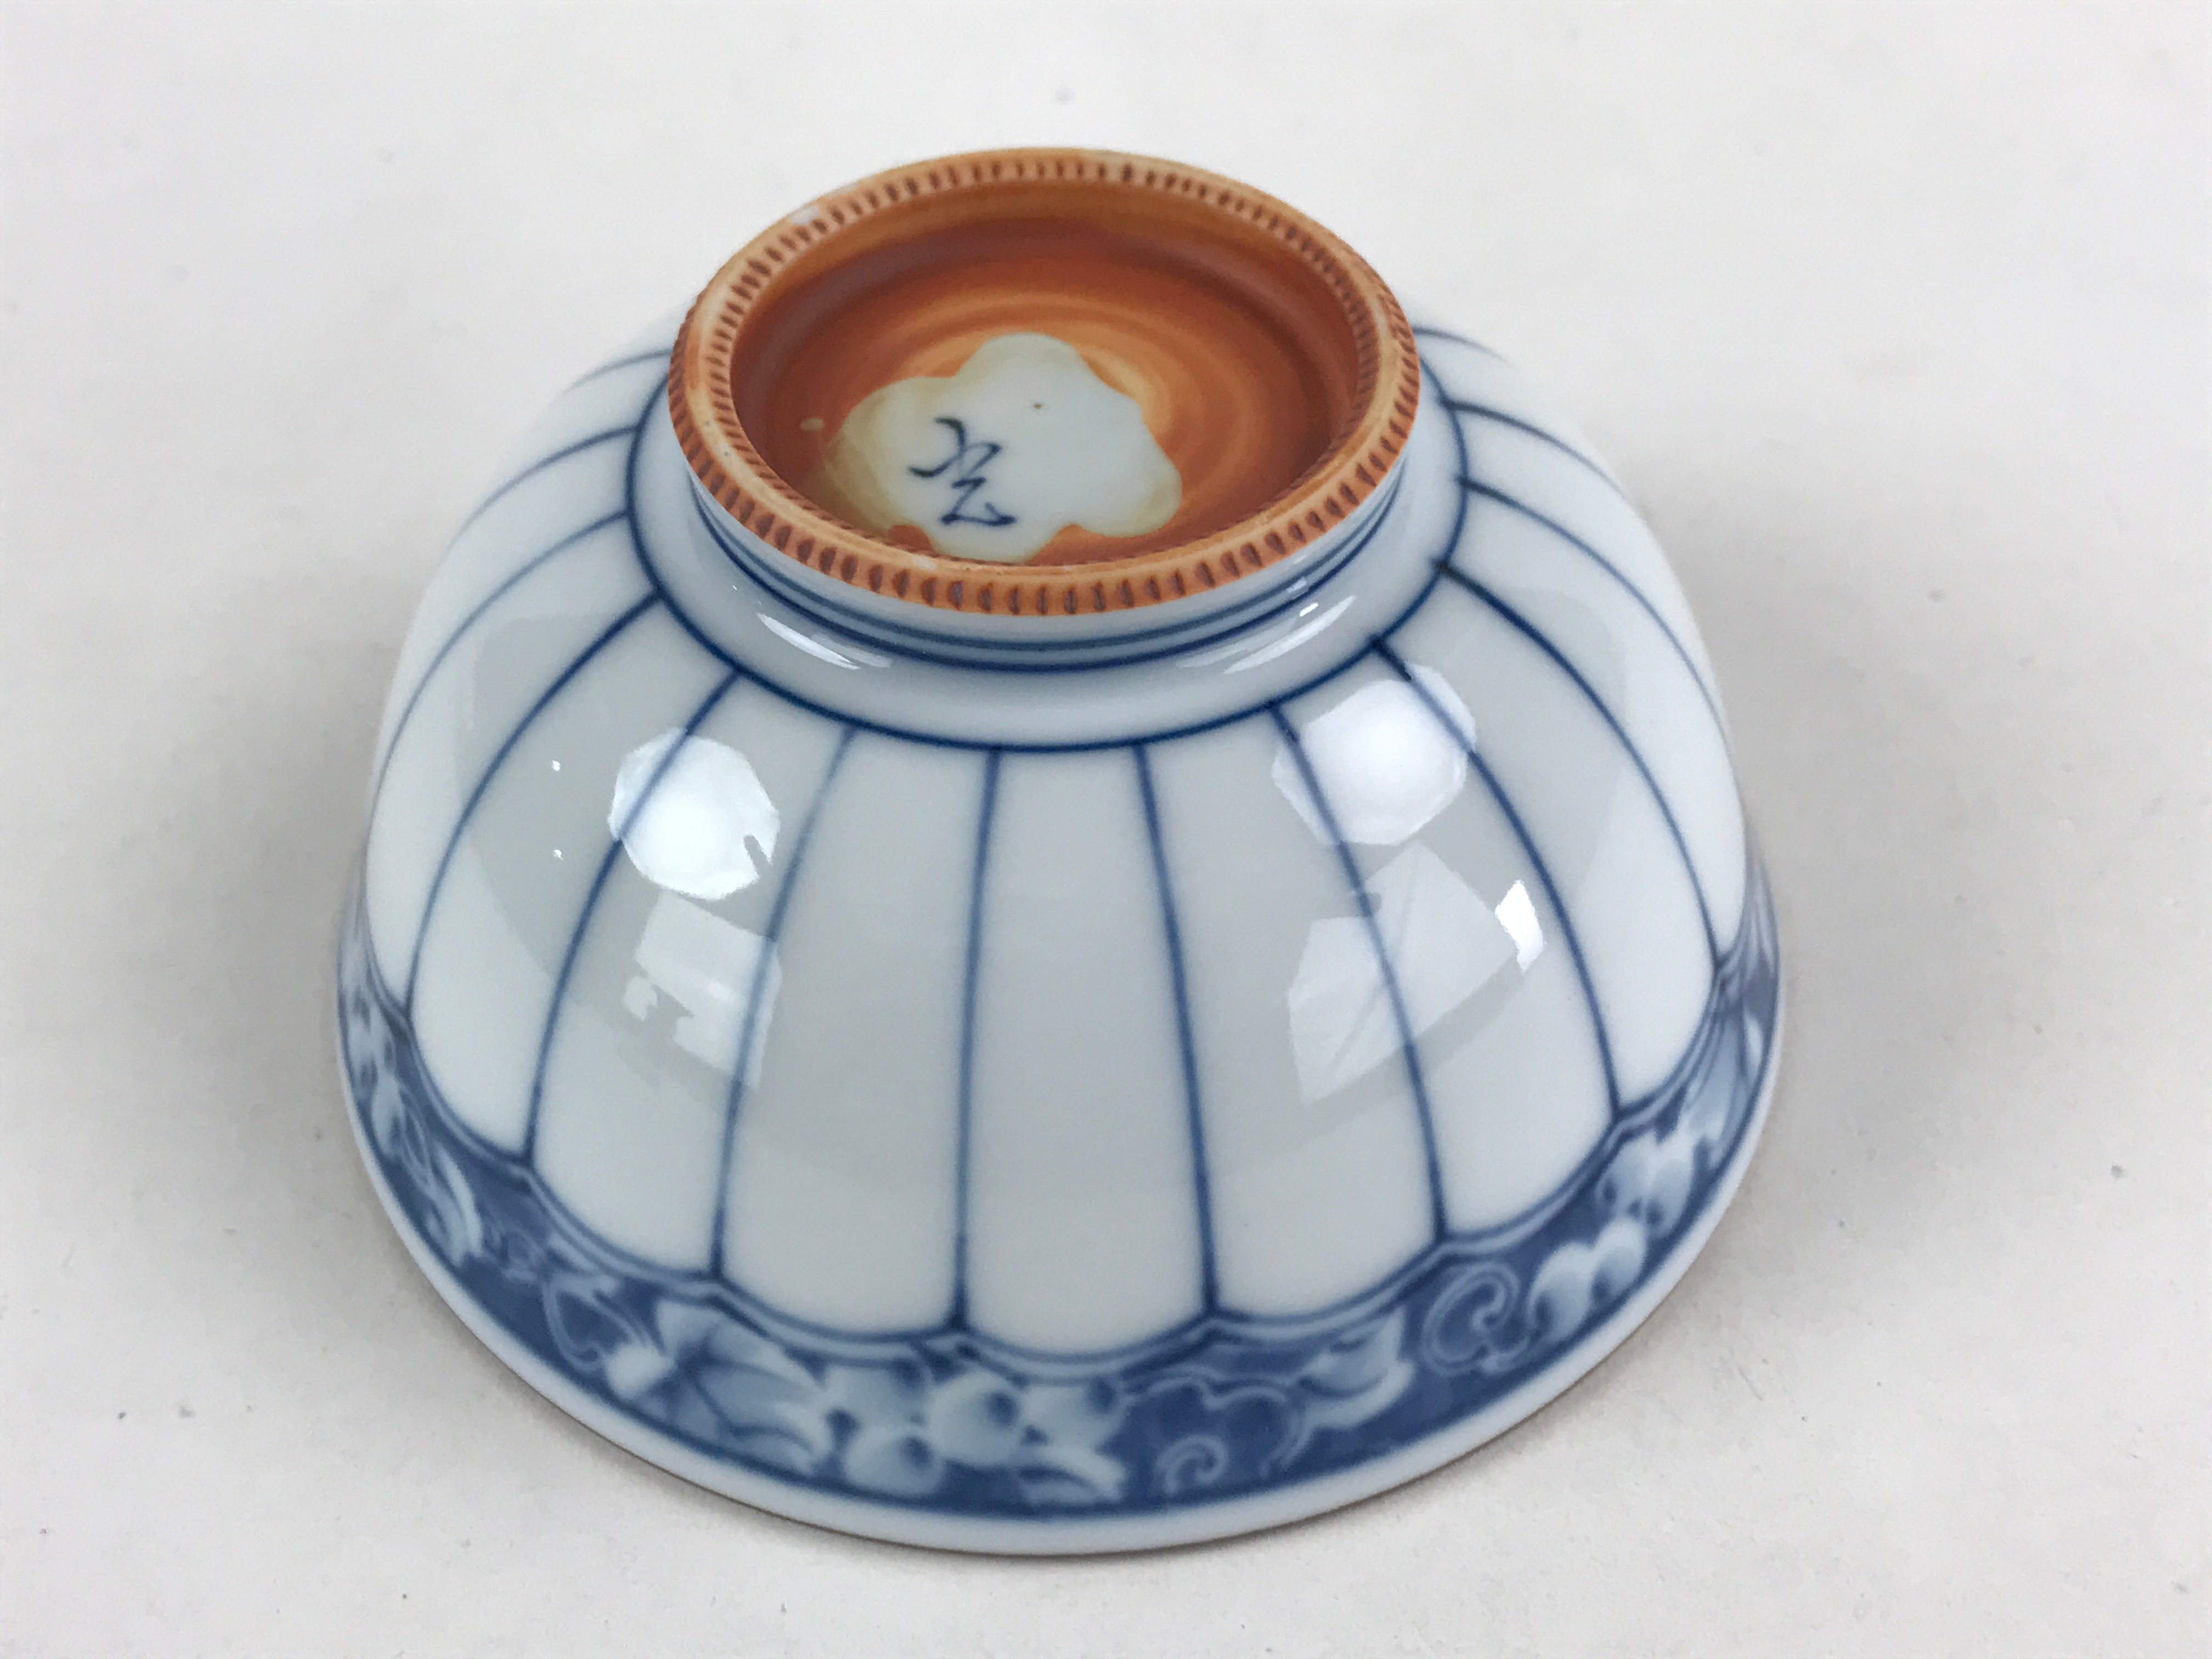 Japanese Porcelain Rice Bowl Vtg Kohosaku Sometsuke Blue Leaves QT156